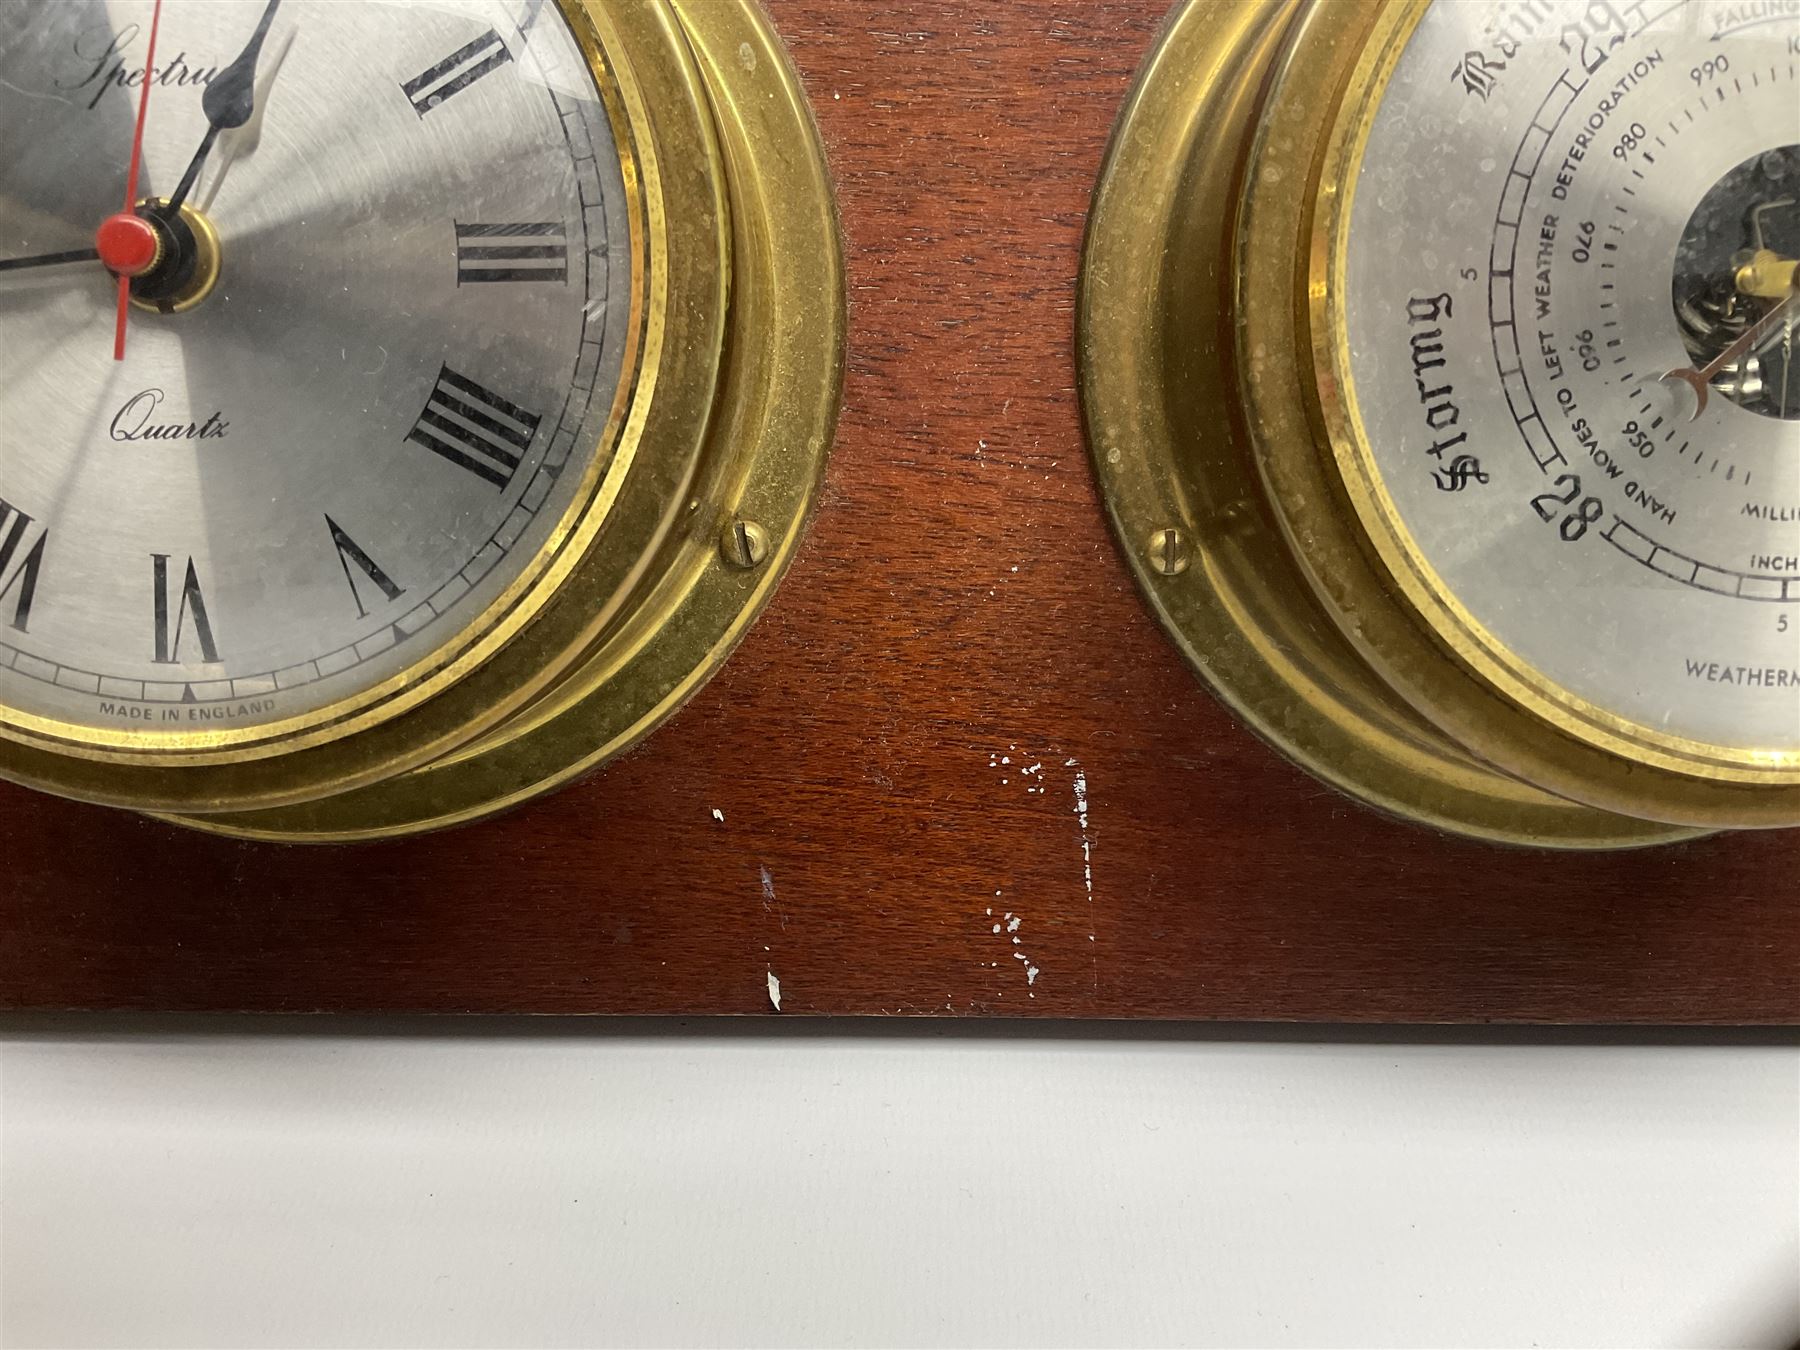 Wall hanging Spectrum quartz clock and Weathermaster barometer - Image 7 of 8